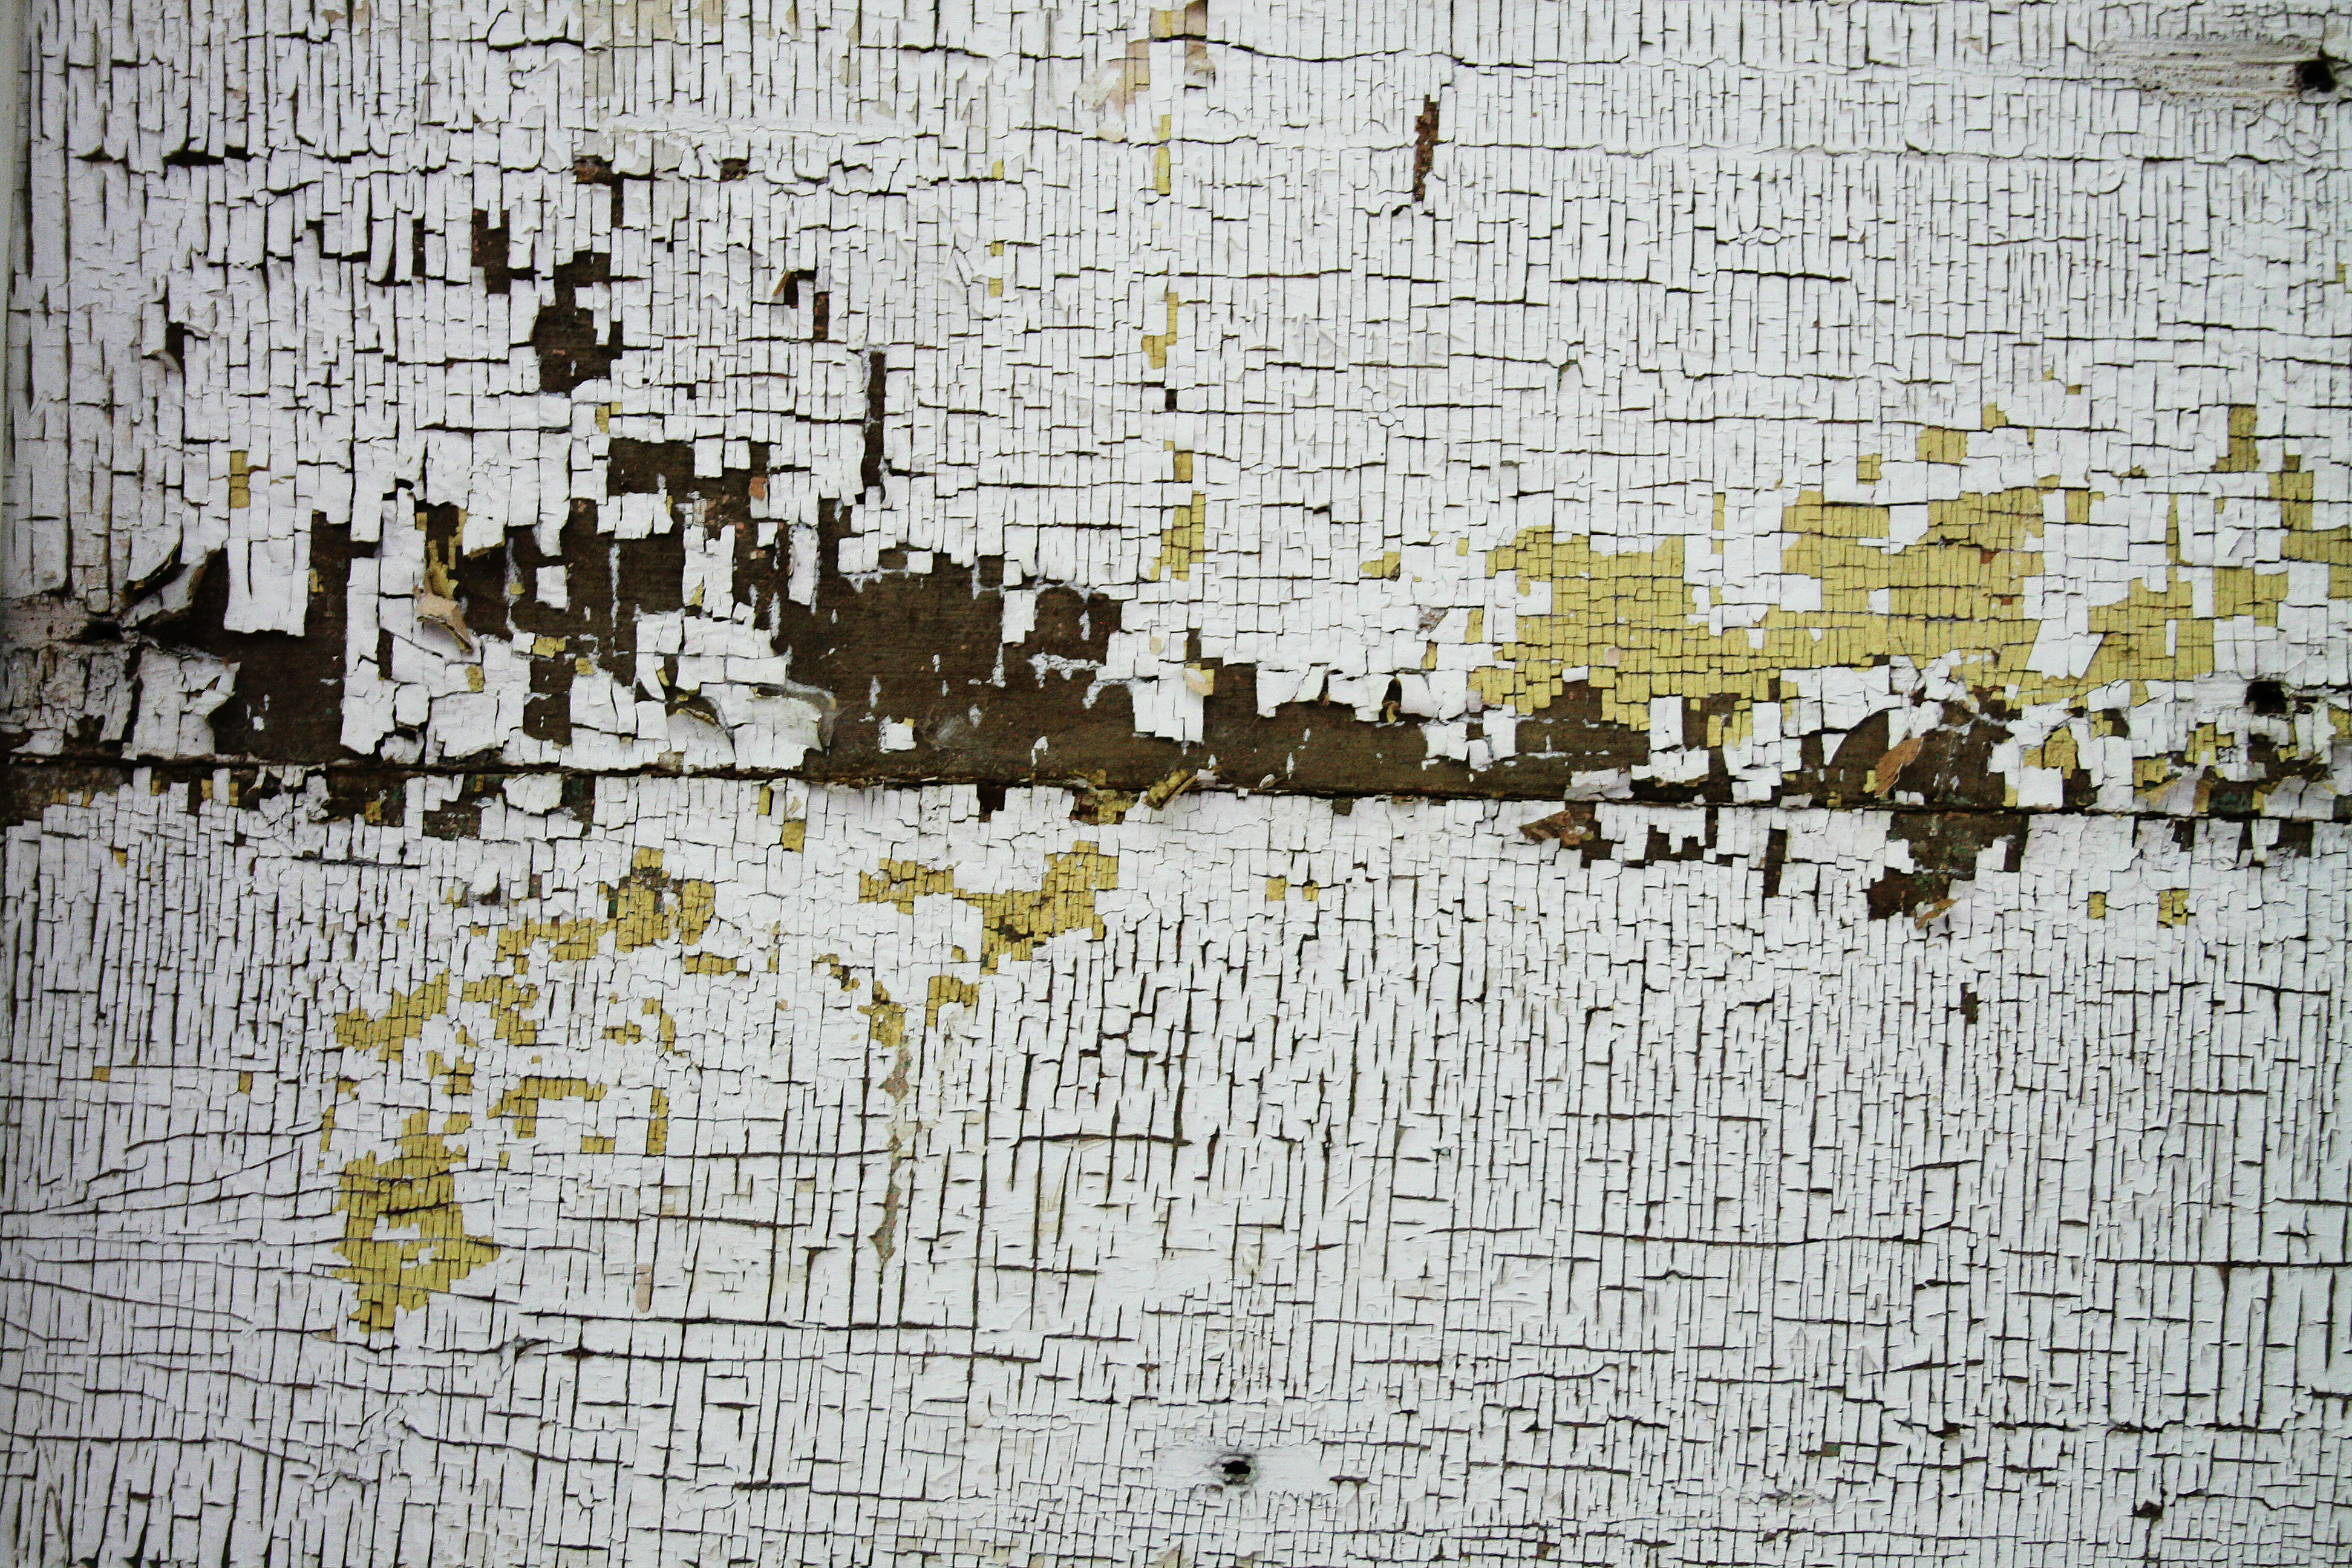 Cracked wood texture photo